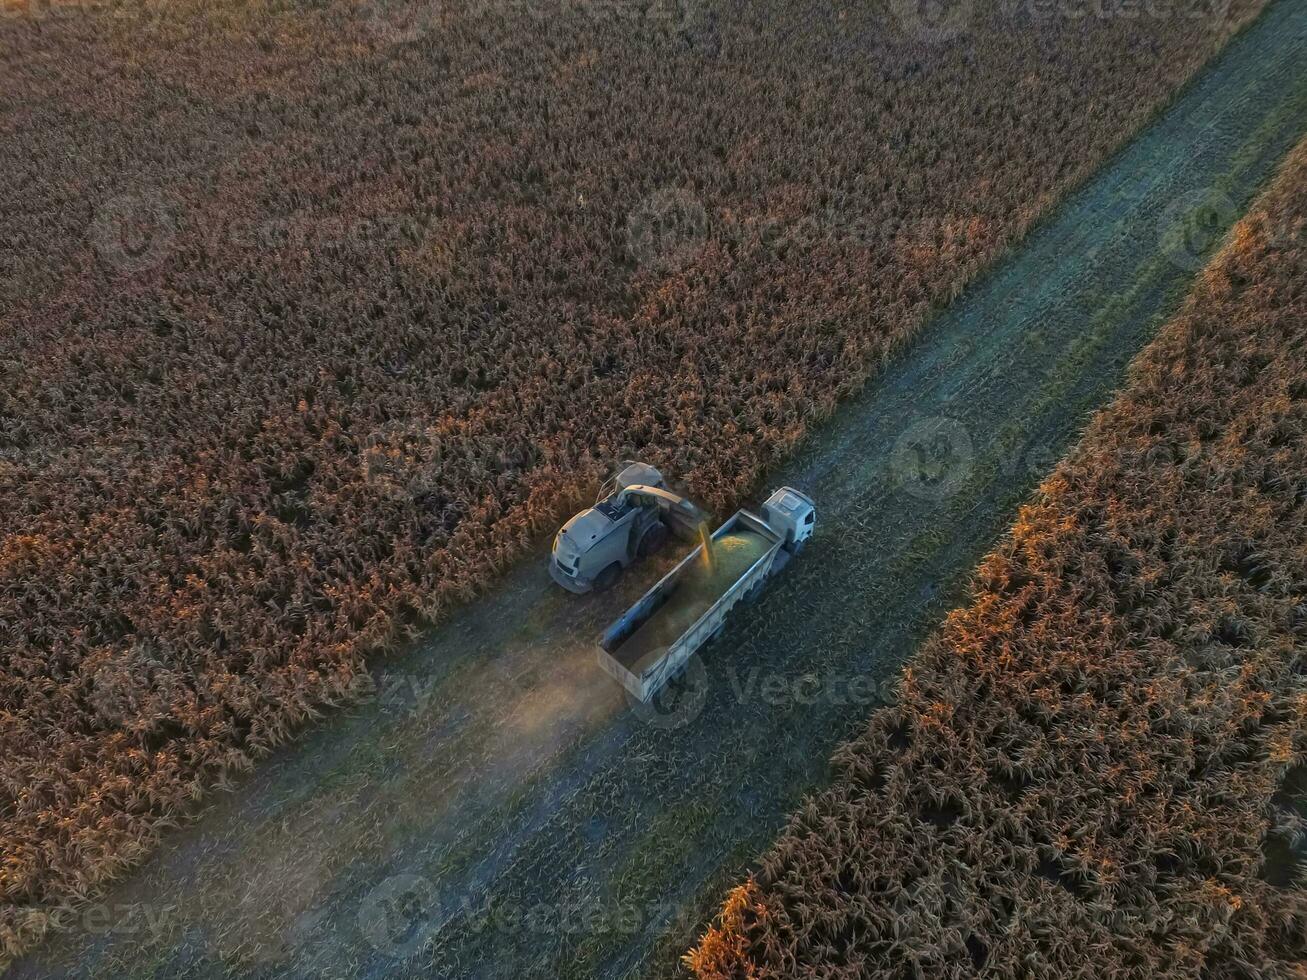 Sorghum harvest, in La Pampa, Argentina photo